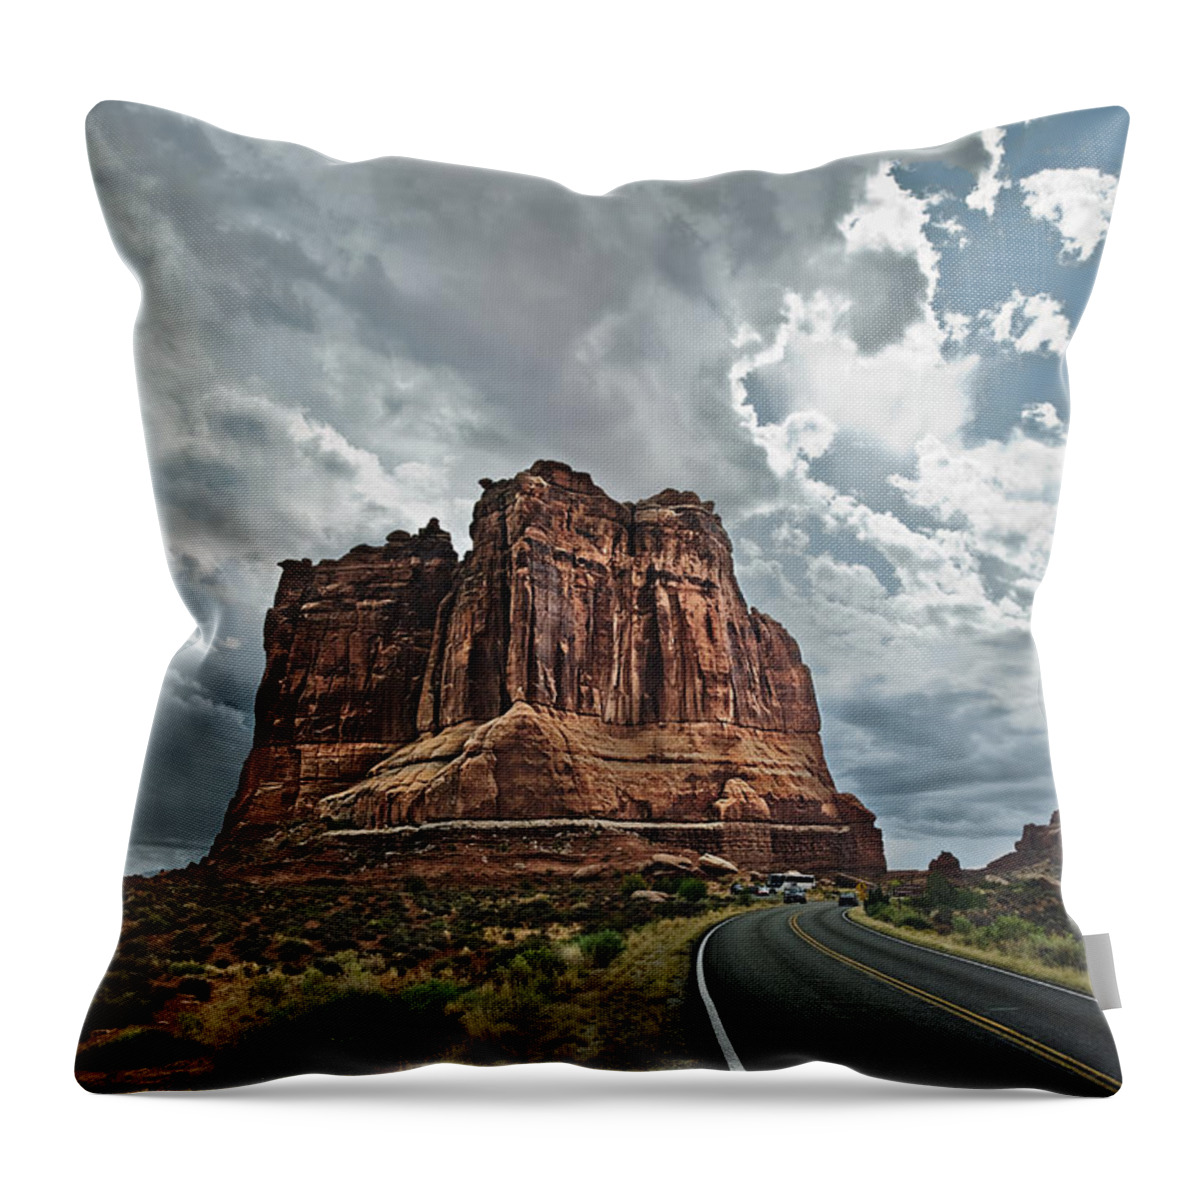 Desert Throw Pillow featuring the photograph The Organ by John Christopher